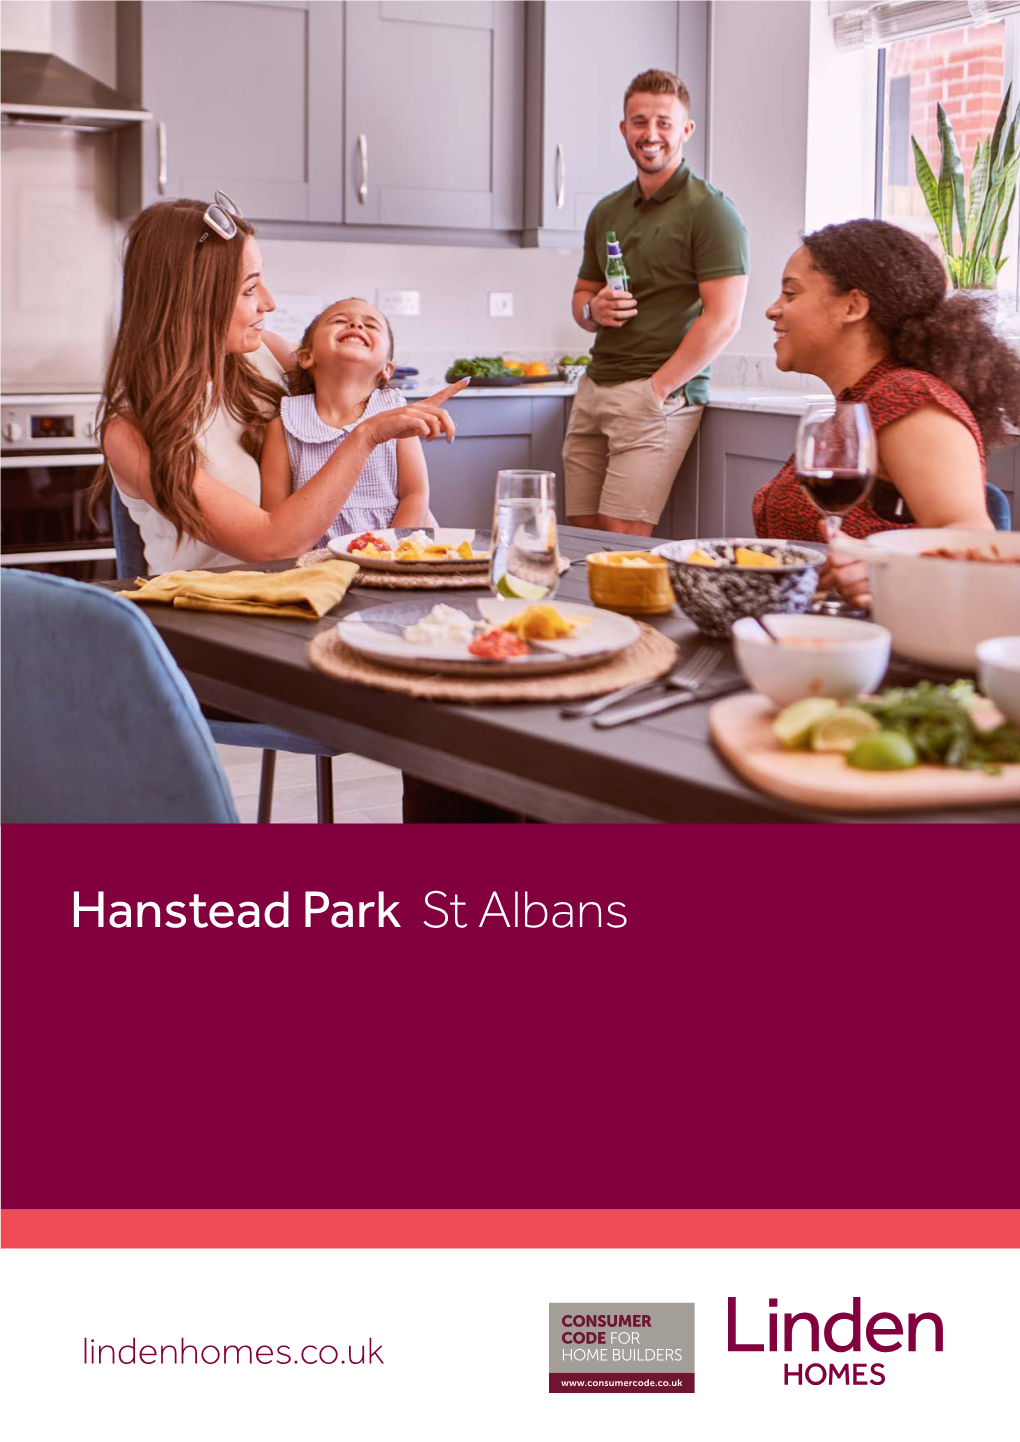 Hanstead Park St Albans